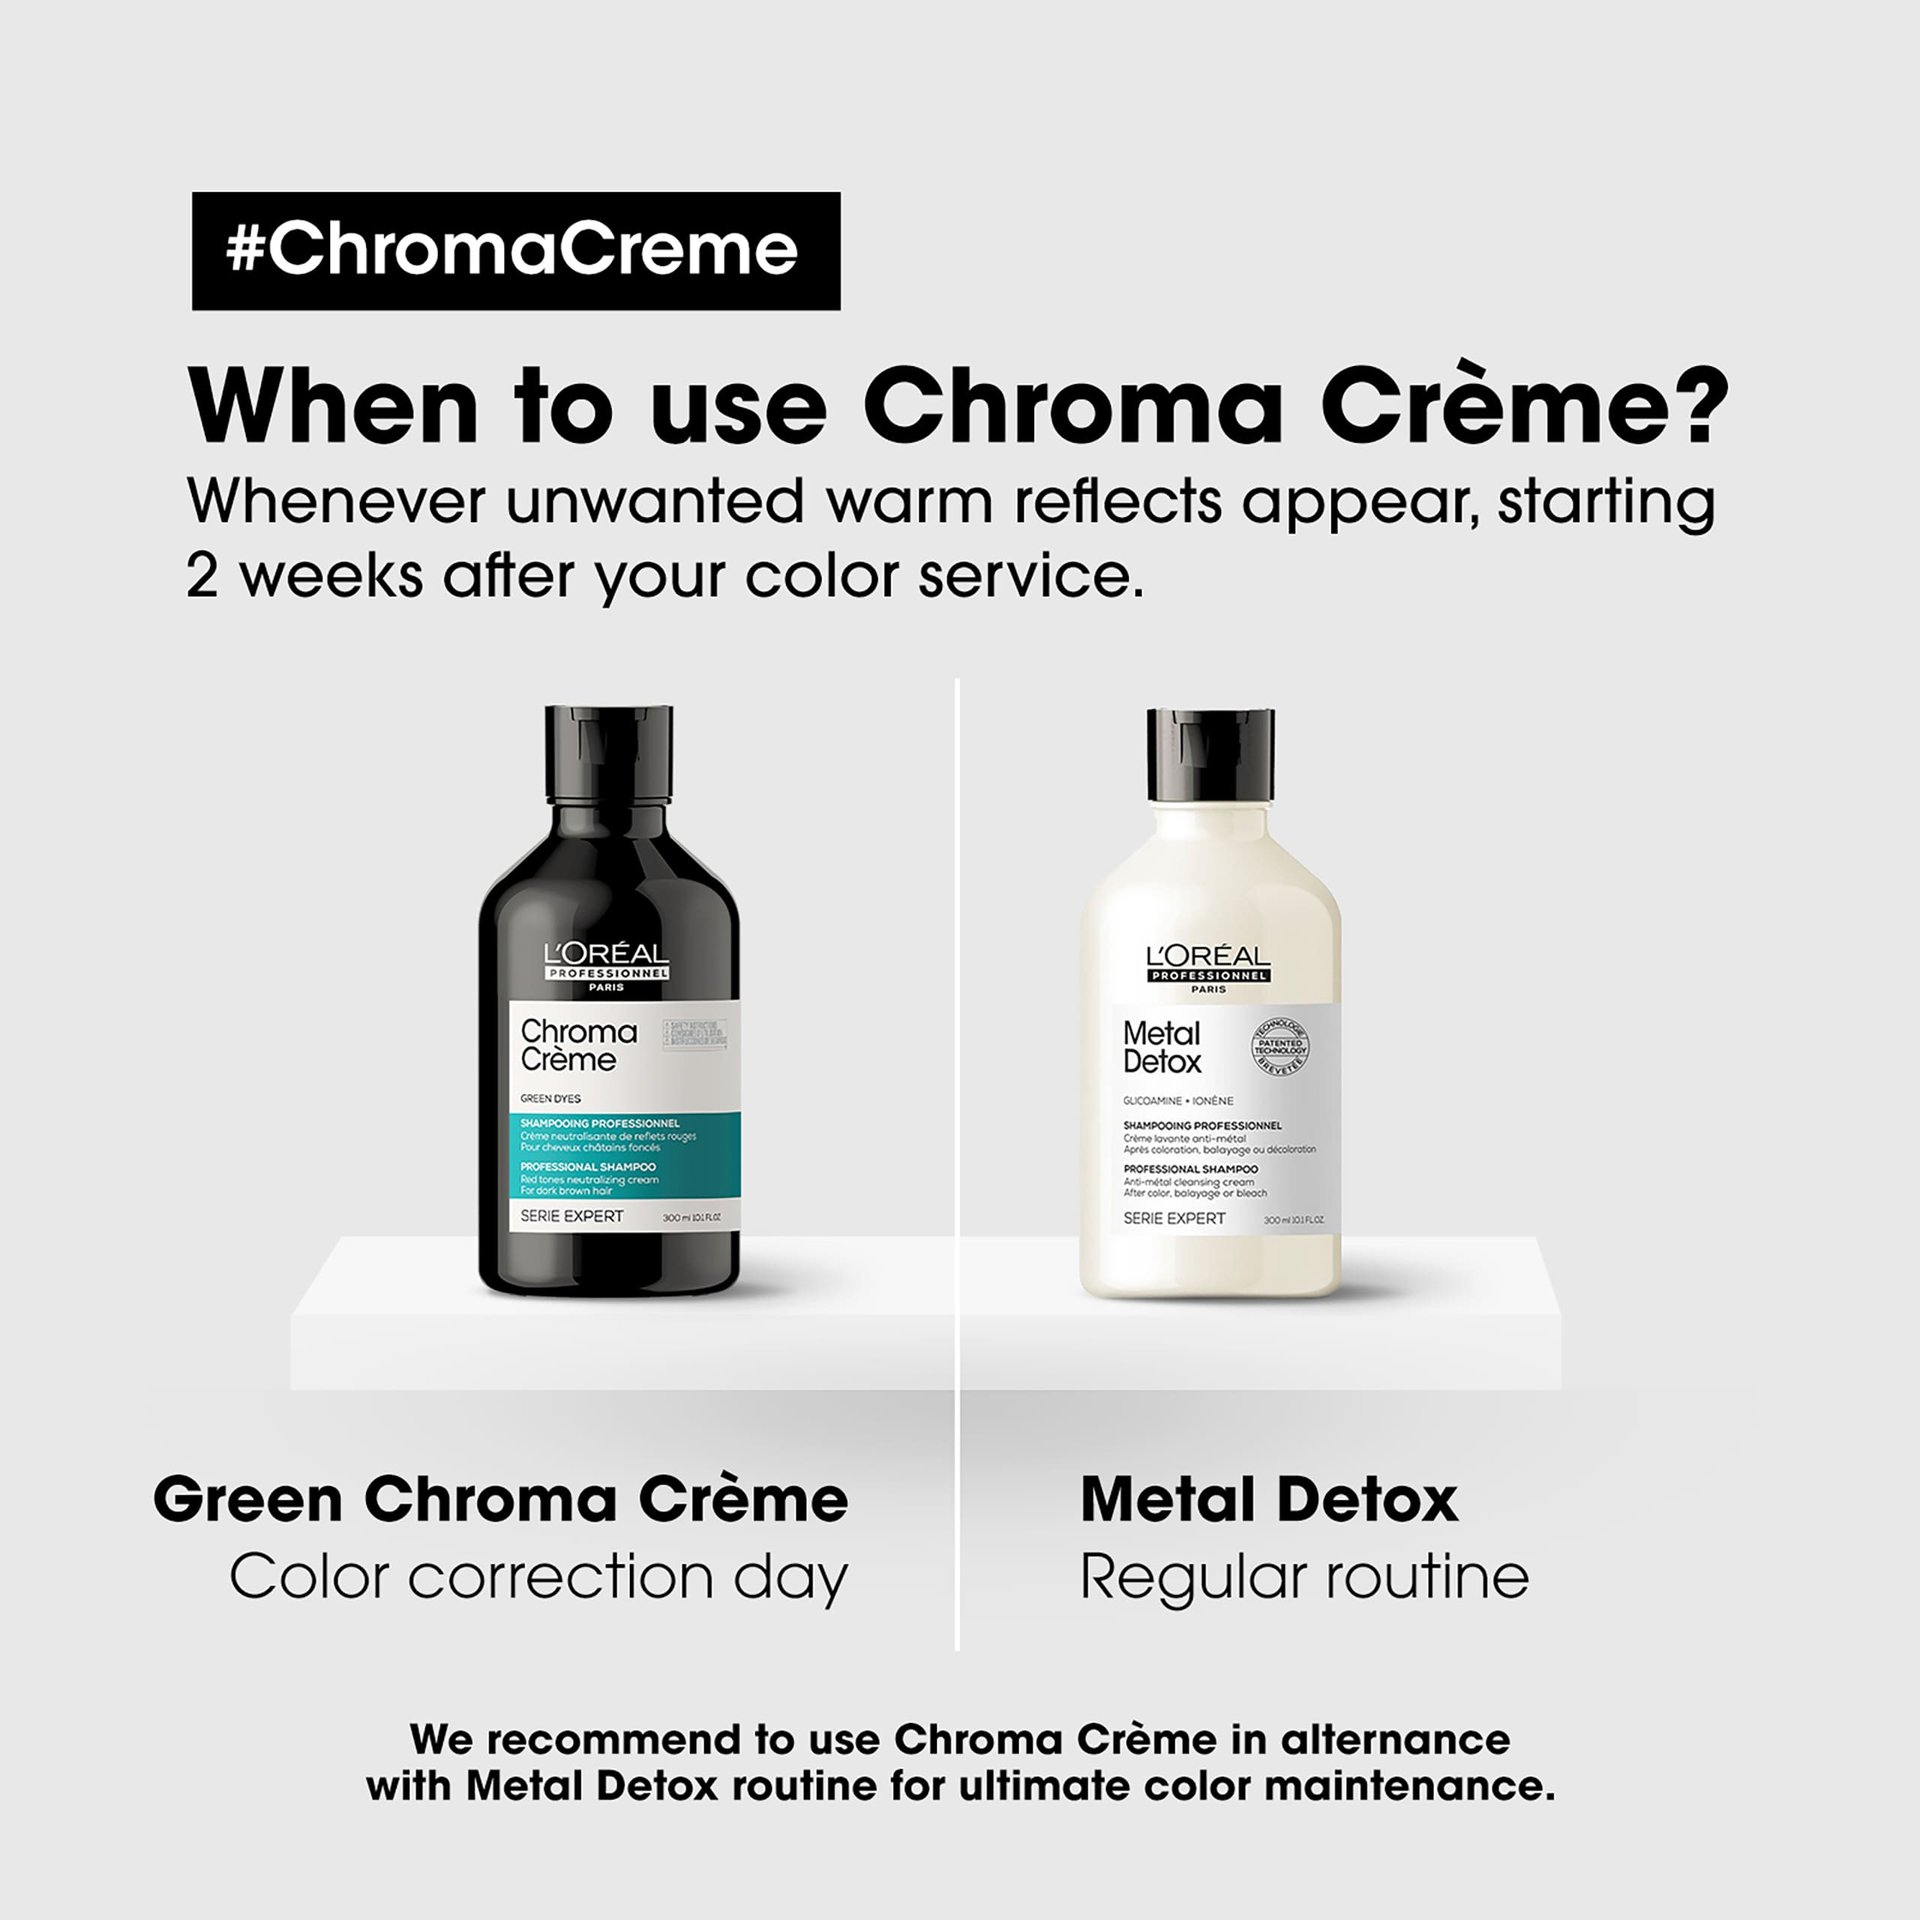 chroma-creme-shampoo-neutralizes-red-reflects3